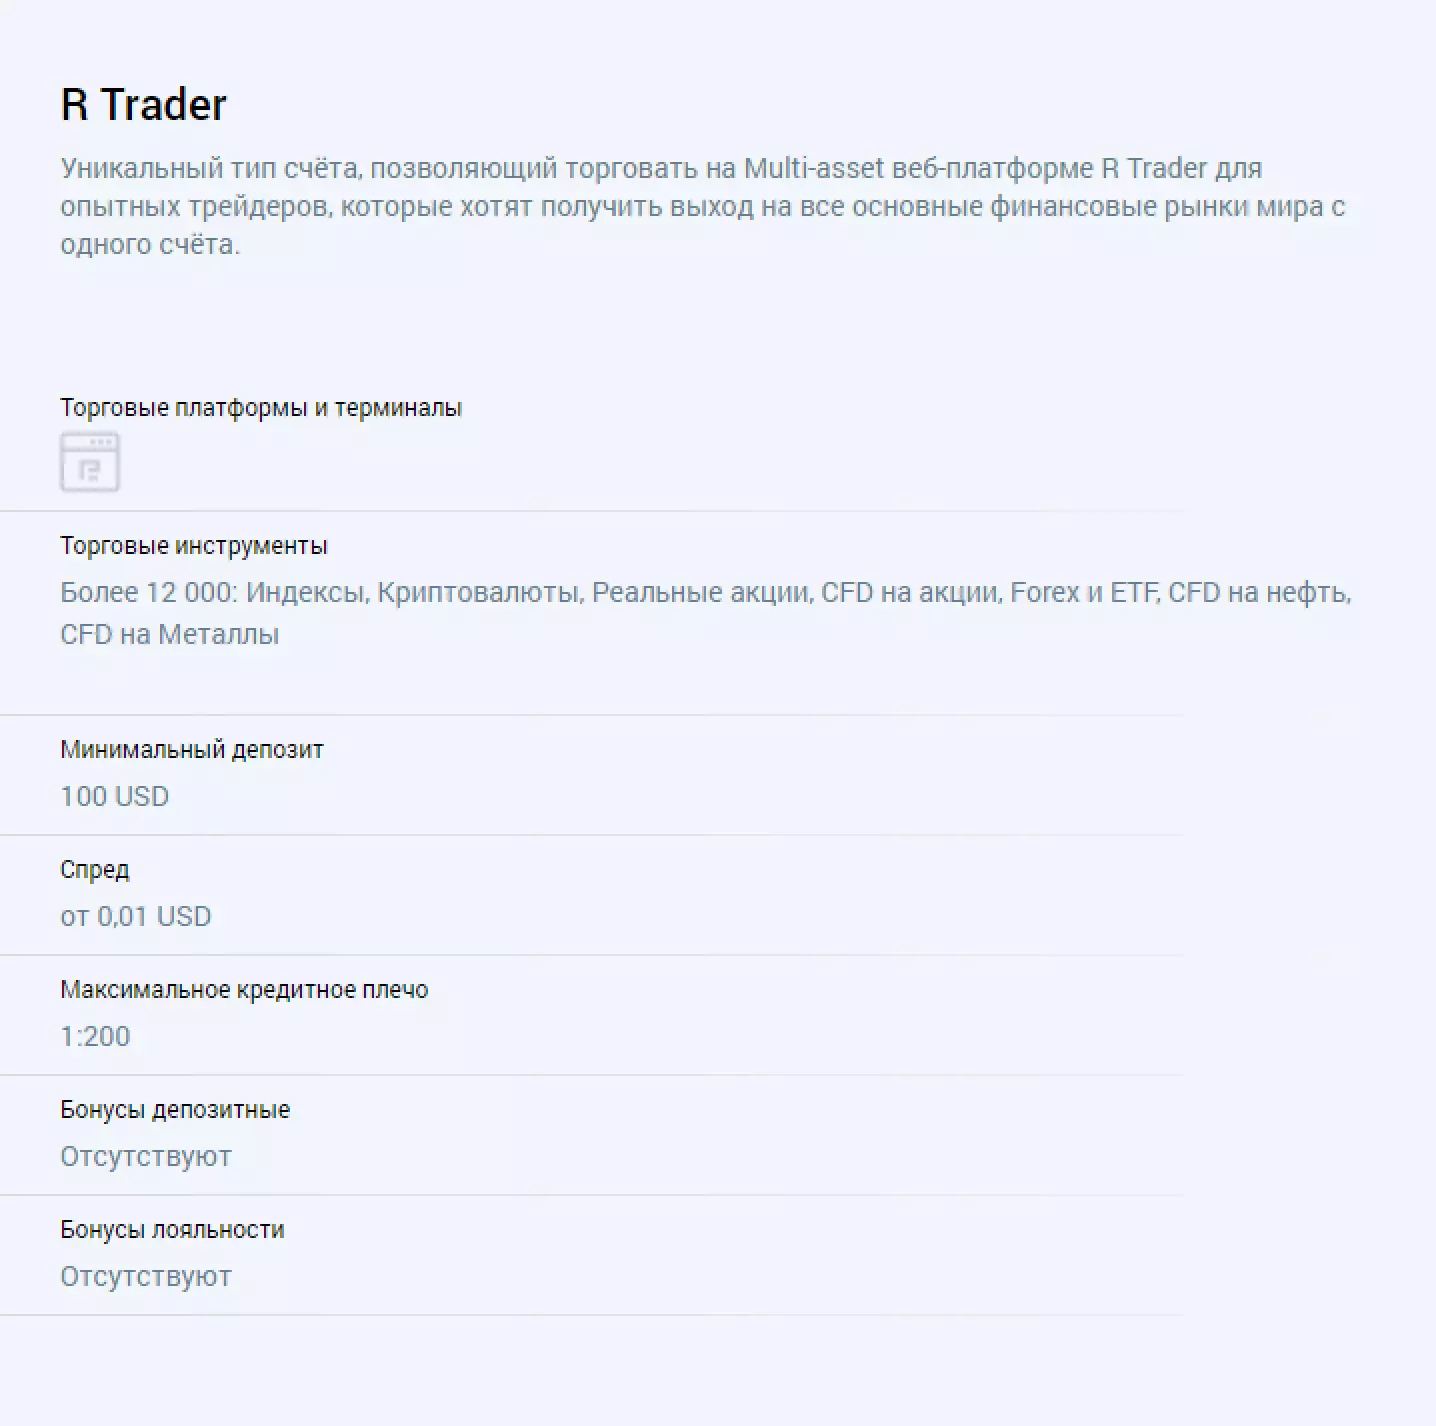 Типы счетов Робофорекс - R Trader